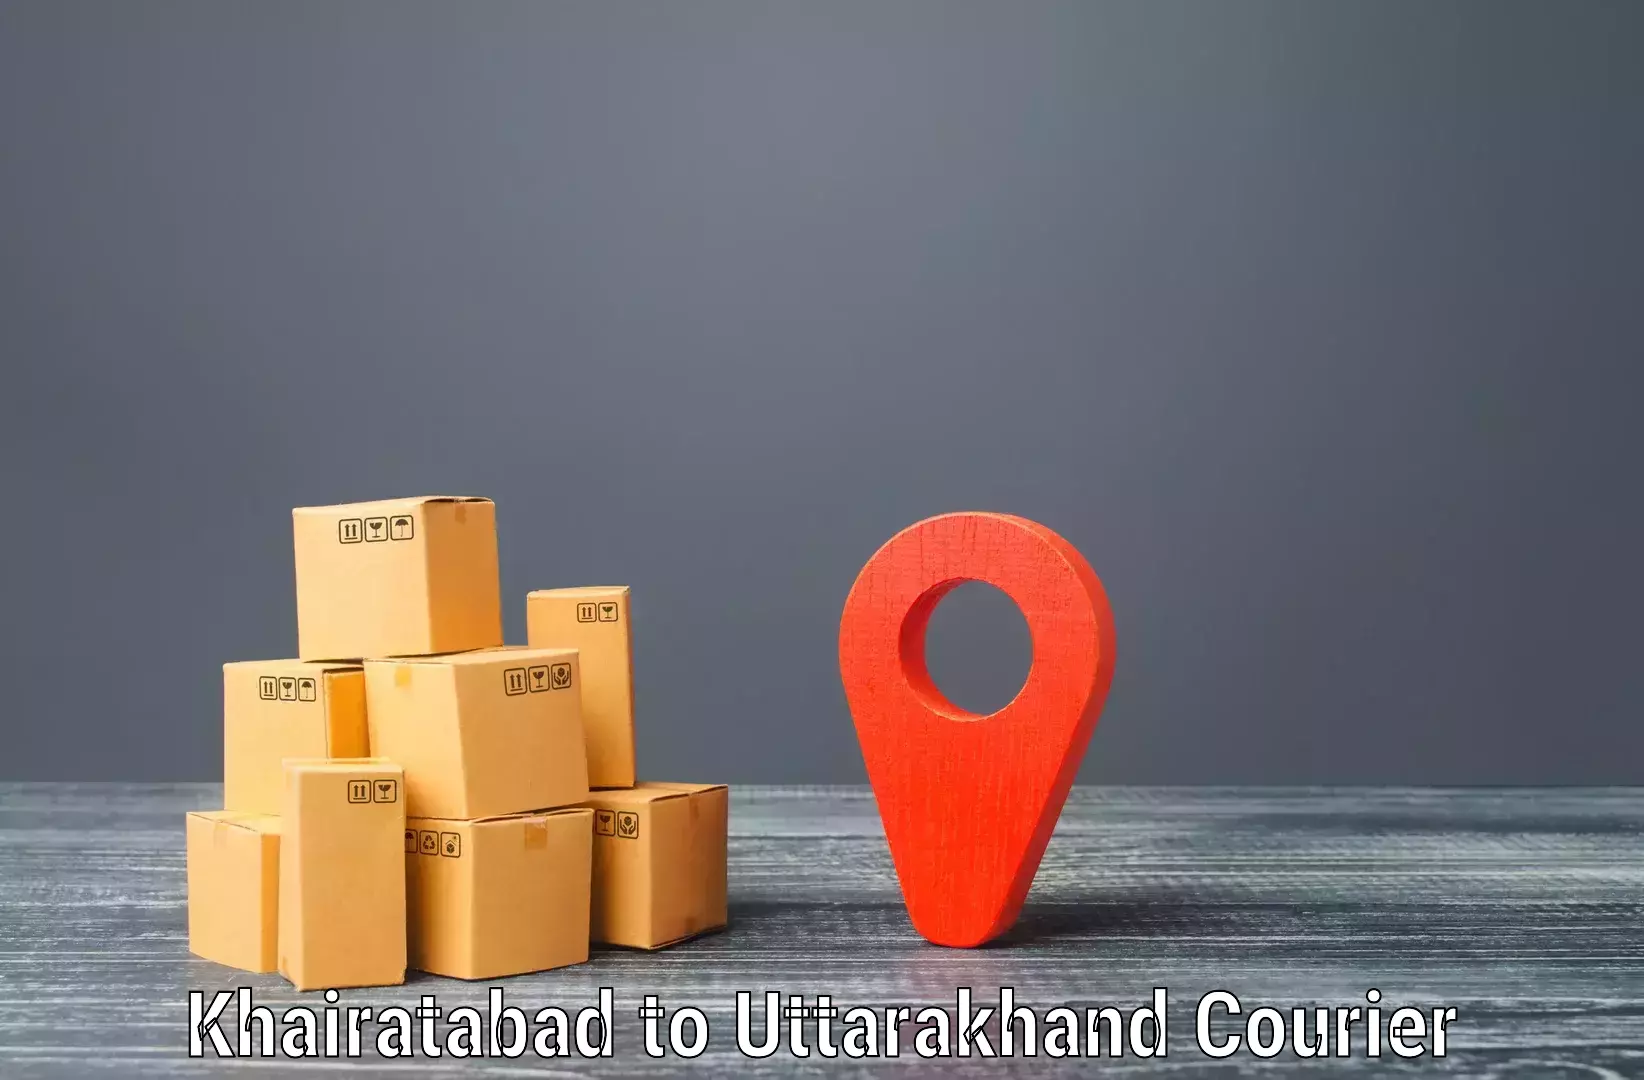 Logistics service provider Khairatabad to Bhagwanpur